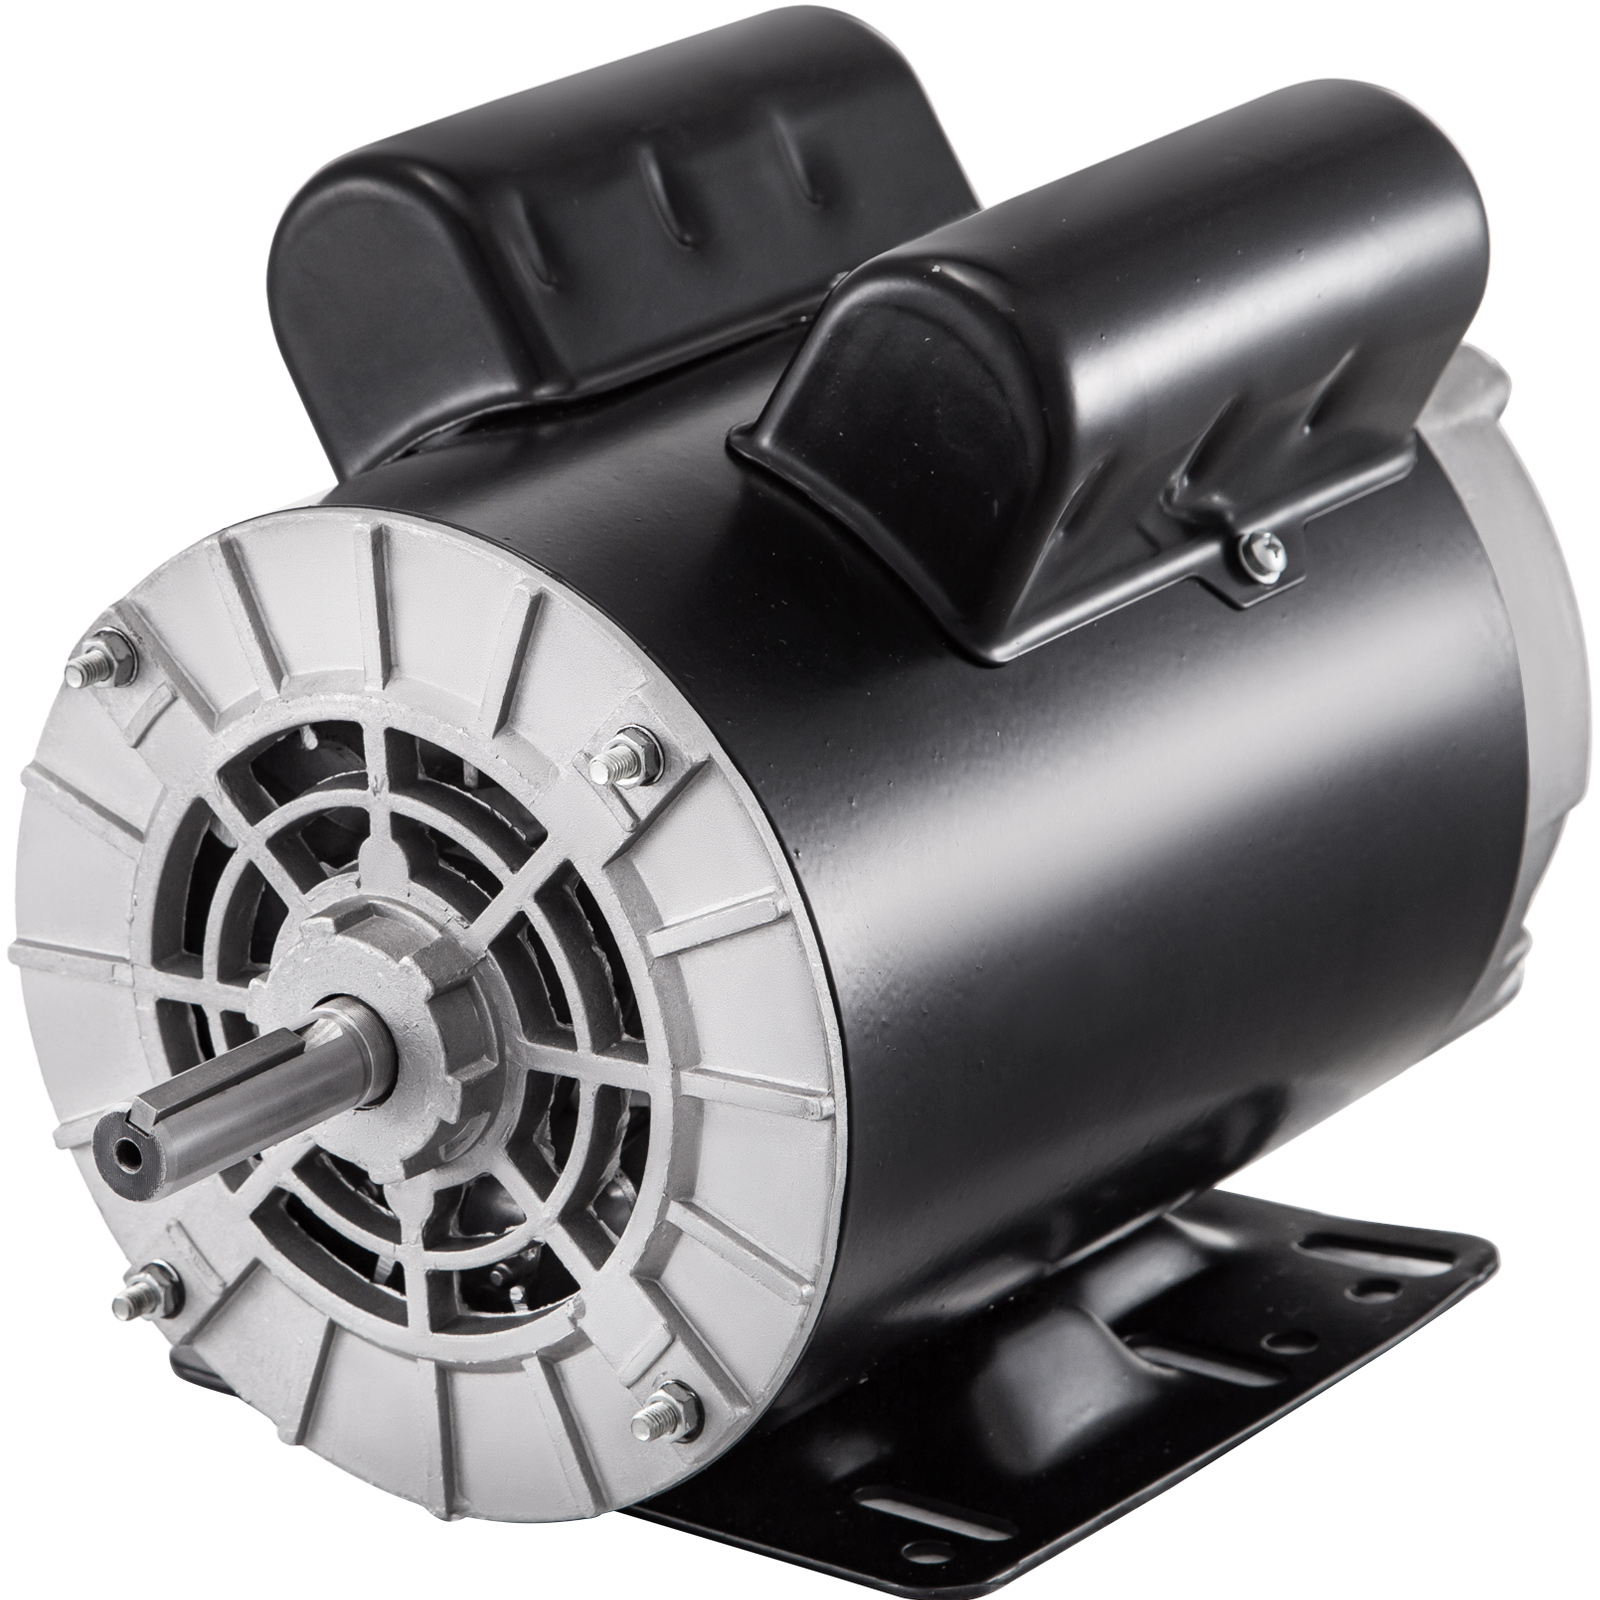 VEVOR Air Compressor Electric Motor 1725/3450RPM Single Phase for